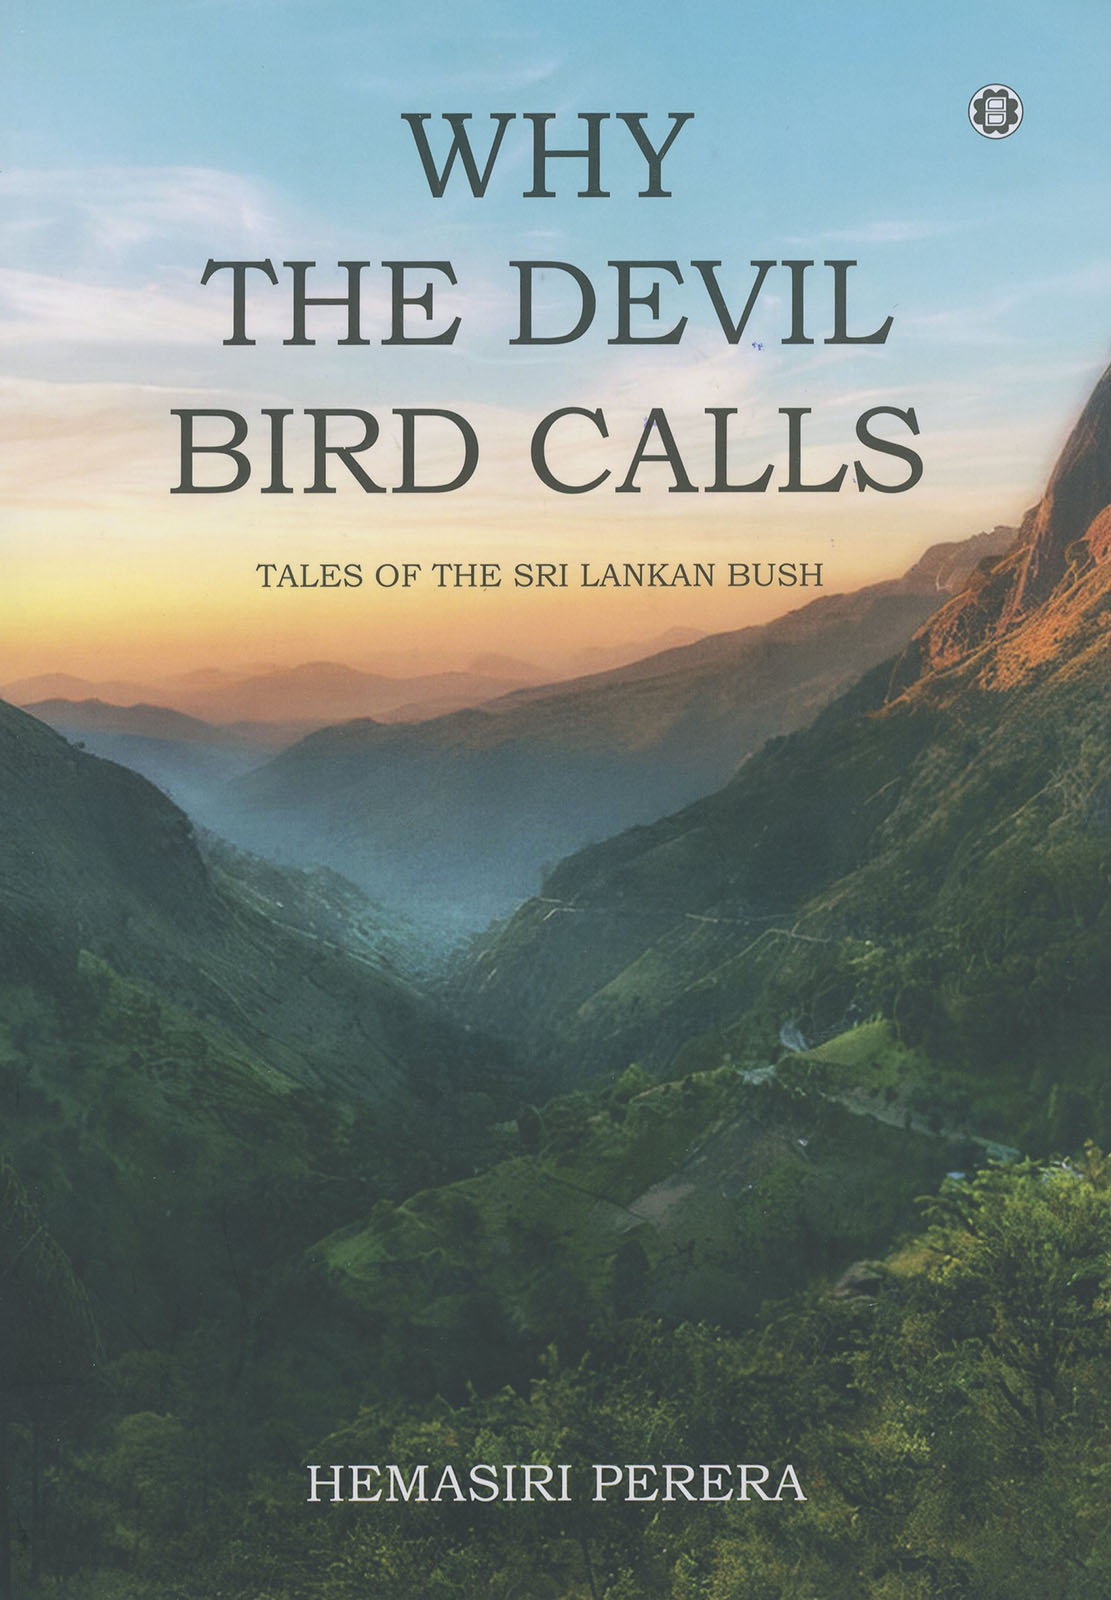 Why the Devil Birds Calls: Tales of the Sri Lankan Bush by Hemasiri Perera